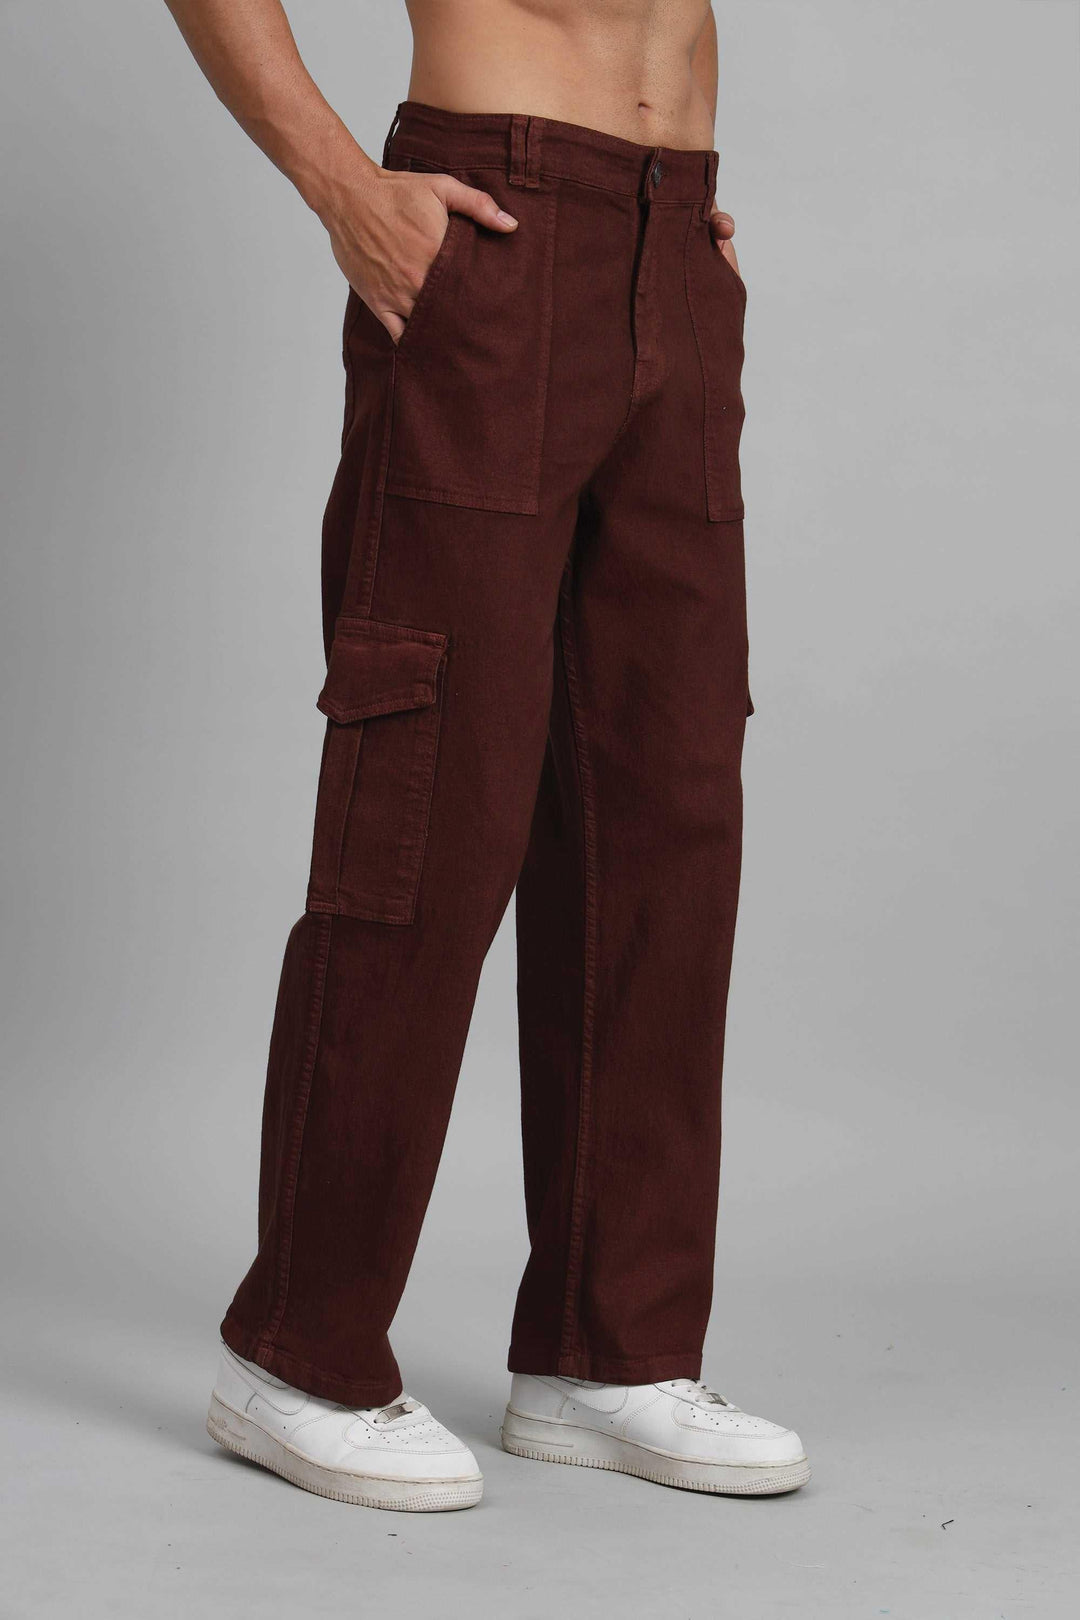 Men's Loose Fit Multiple Pocket Brown Denim Cargo Pant - Peplos Jeans 